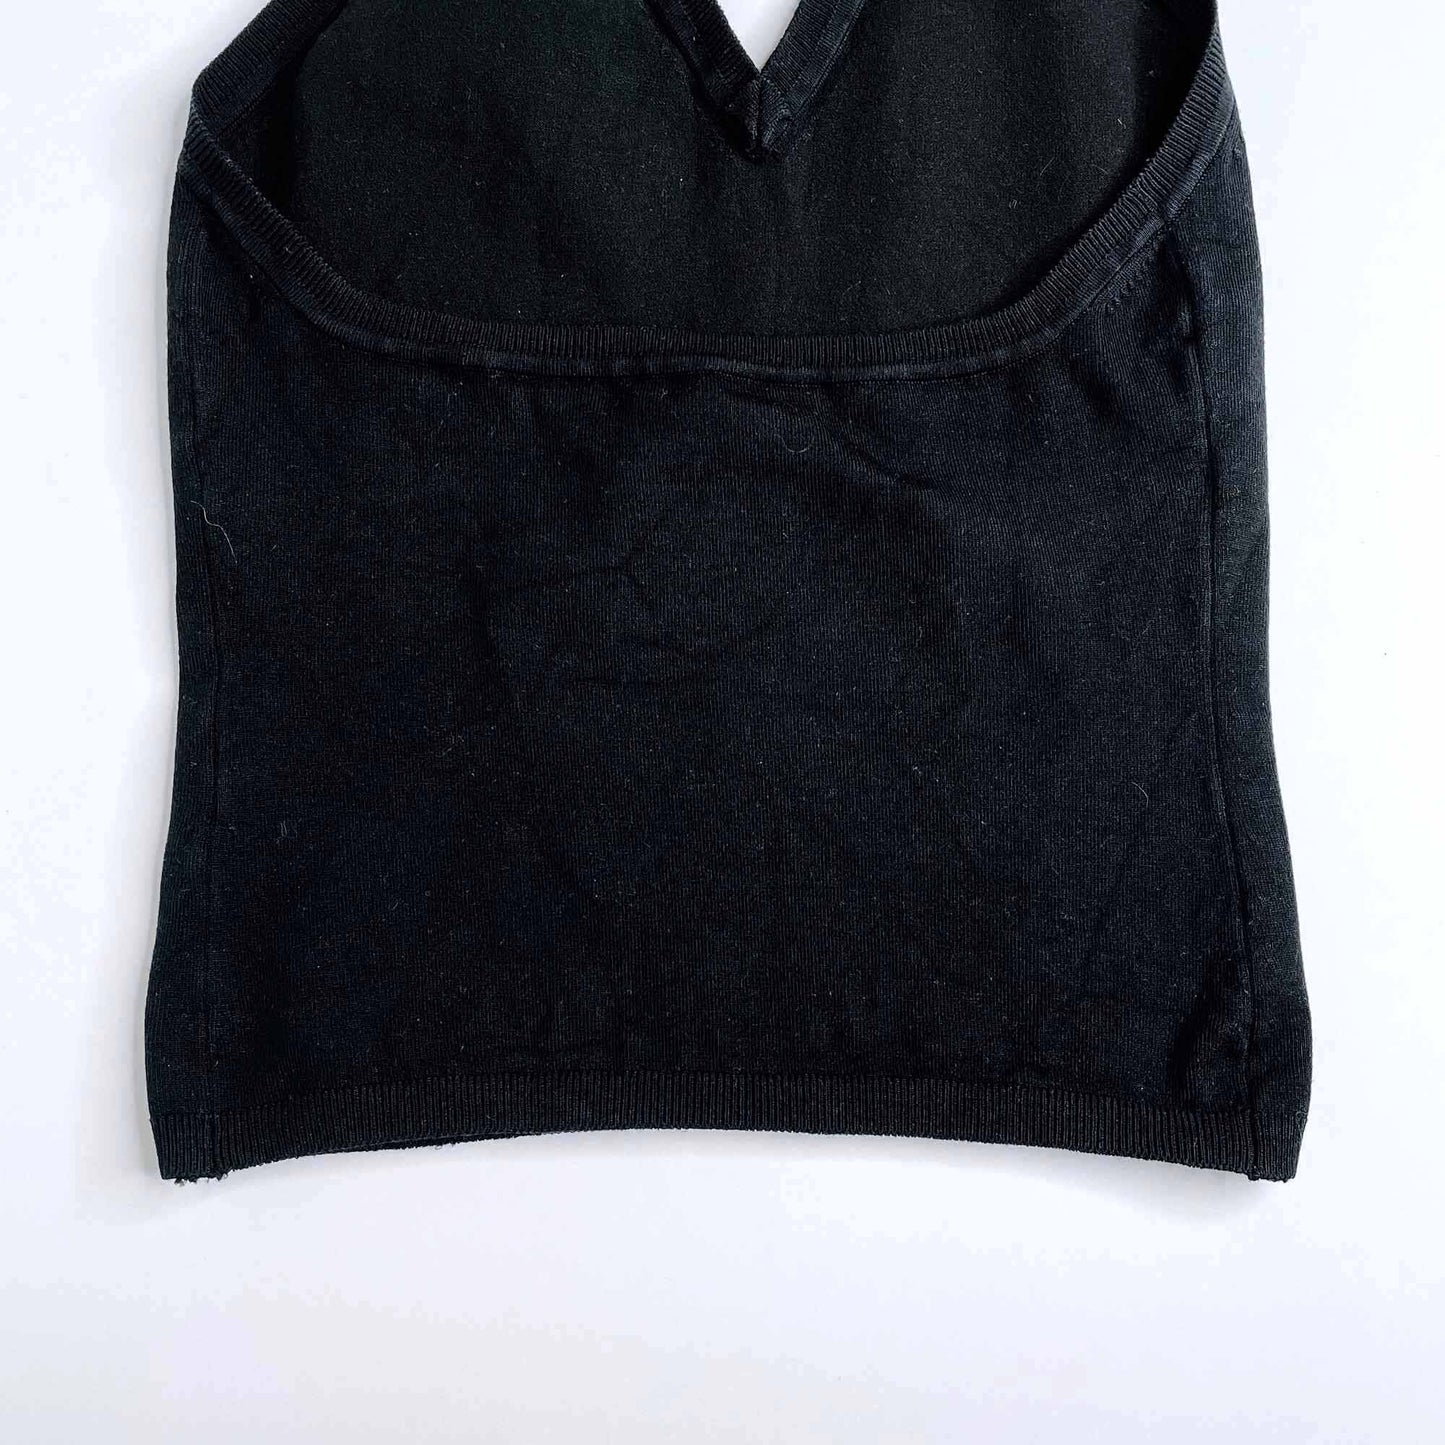 essendi silk blend knit halter top - size small